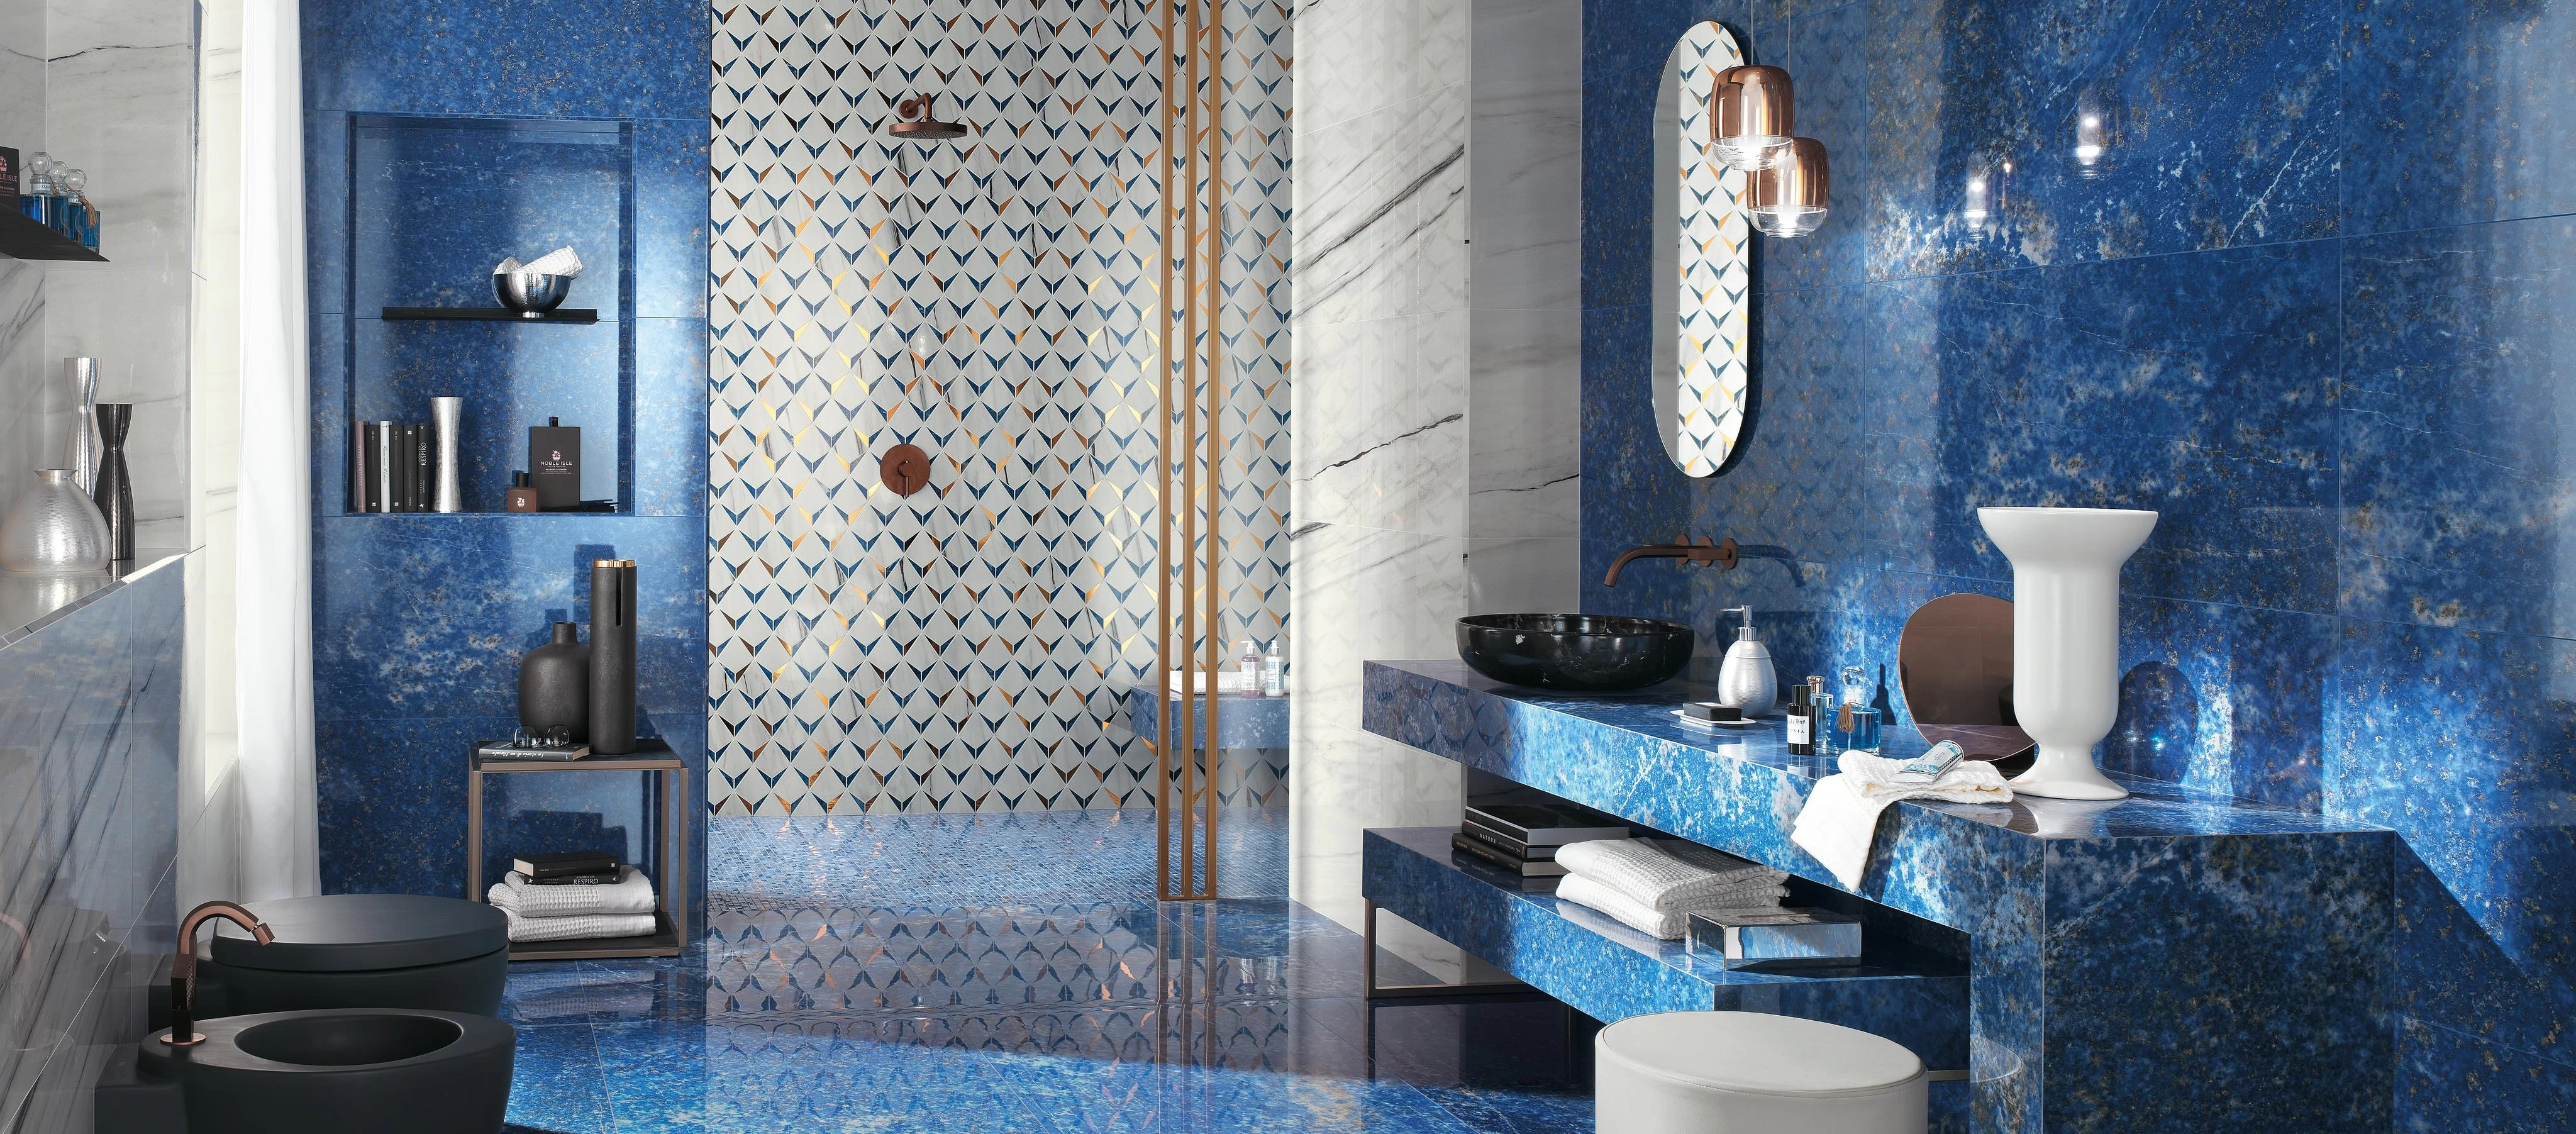 Dream Home Spa Becomes Reality - Kitchen & Bath Design News